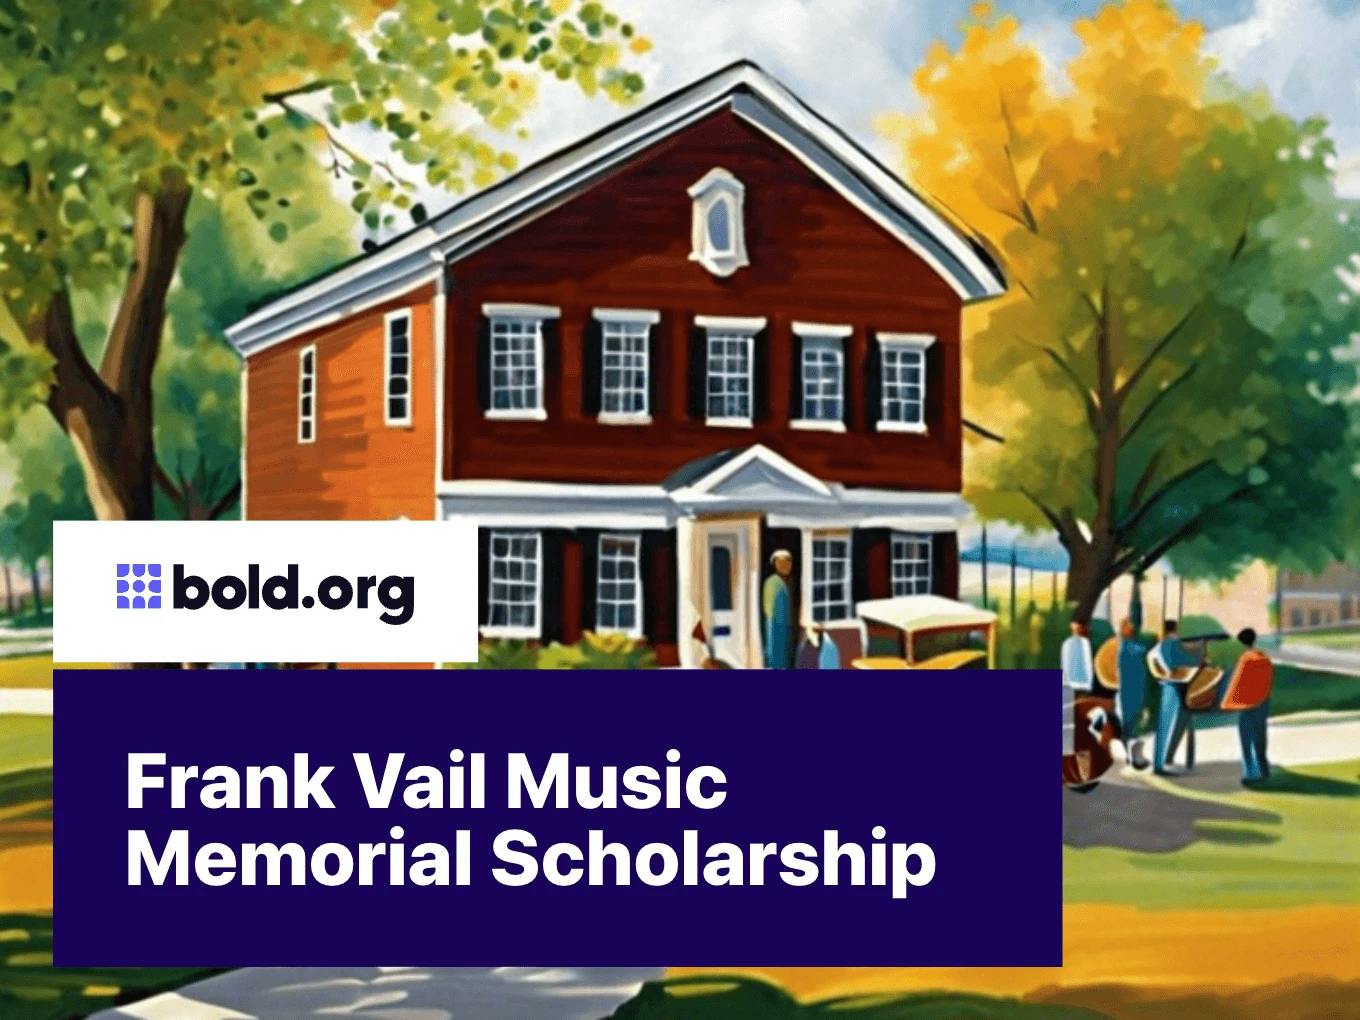 Frank Vail Music Memorial Scholarship